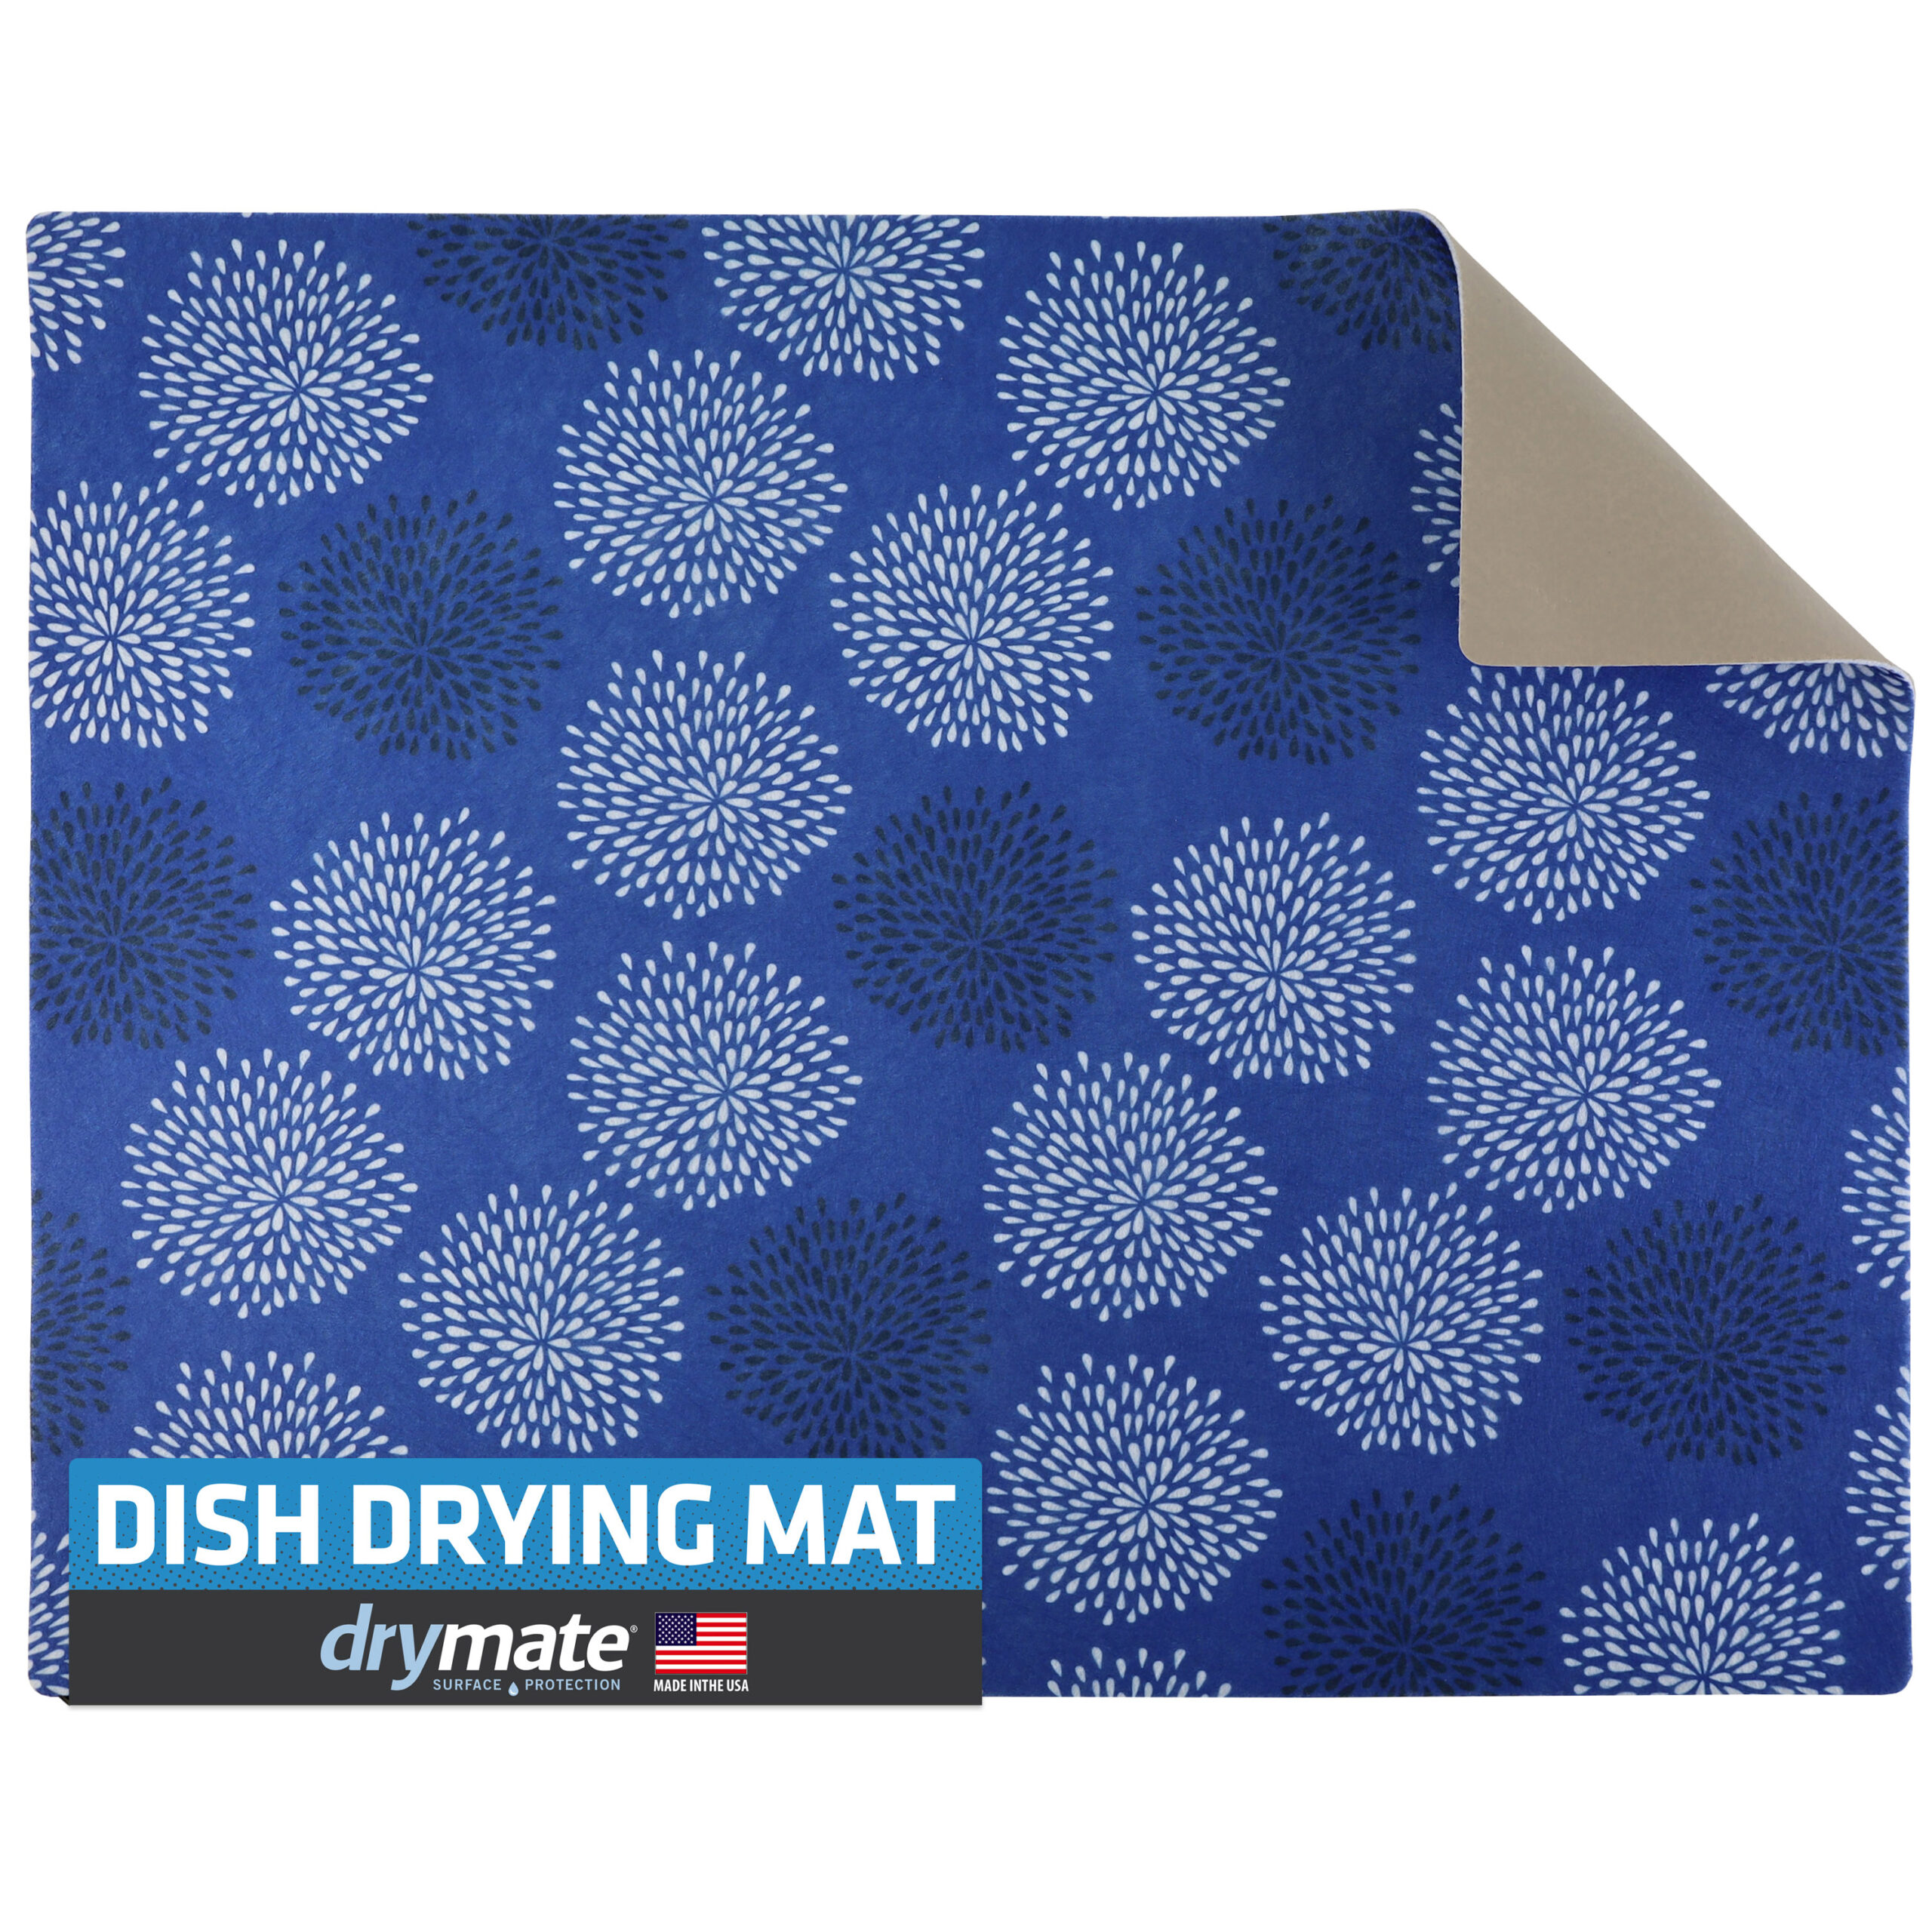 Drymate 19x24 Dish Drying Mat - Light Blue Floral : Target